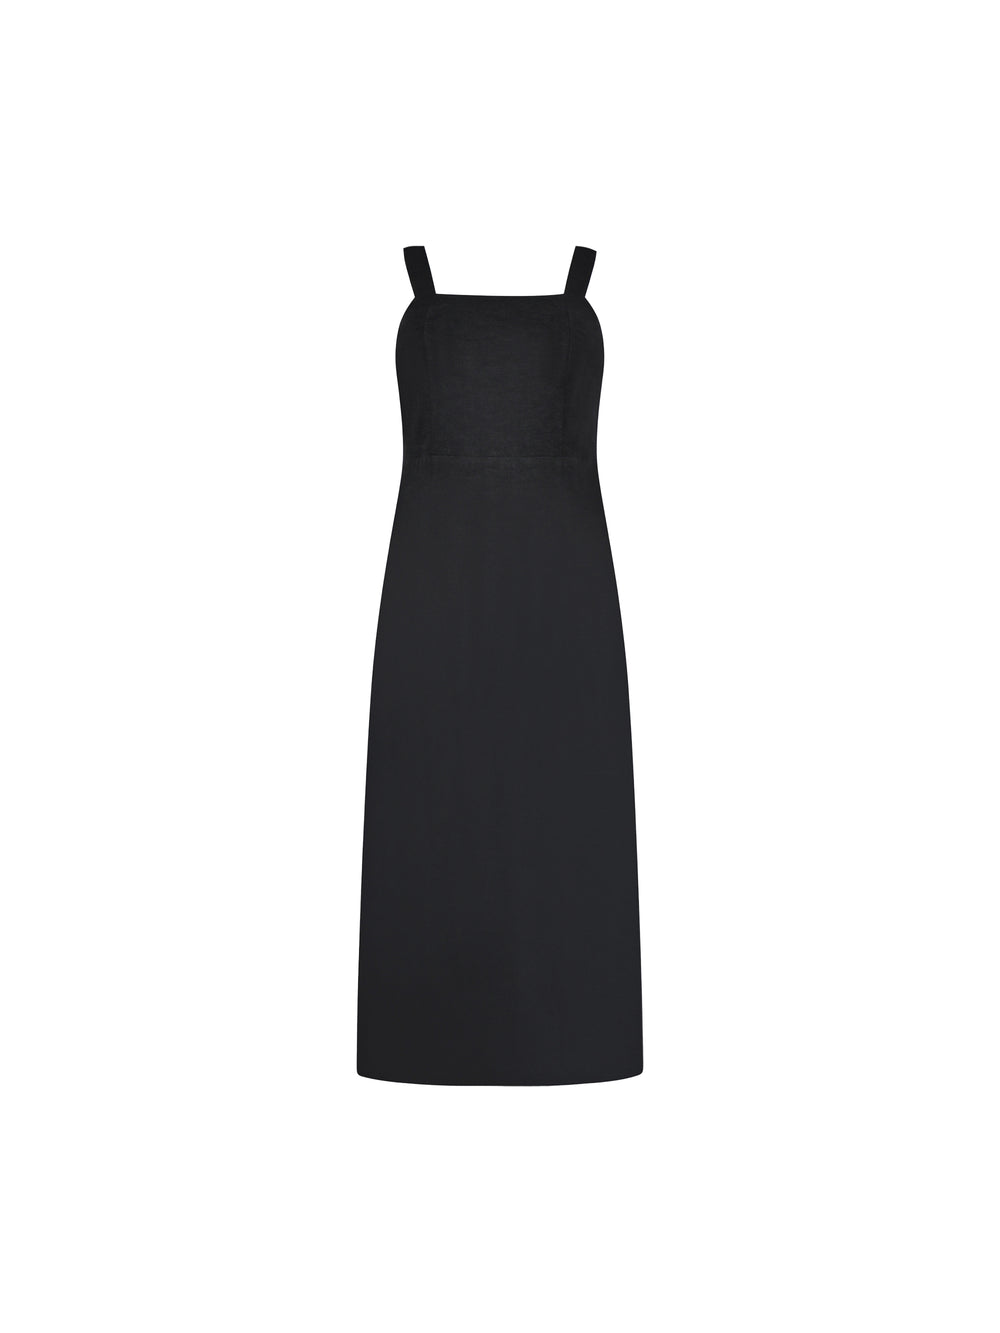 Black Linen Cami Dress, Linen Maxi dress Black - Linenbee